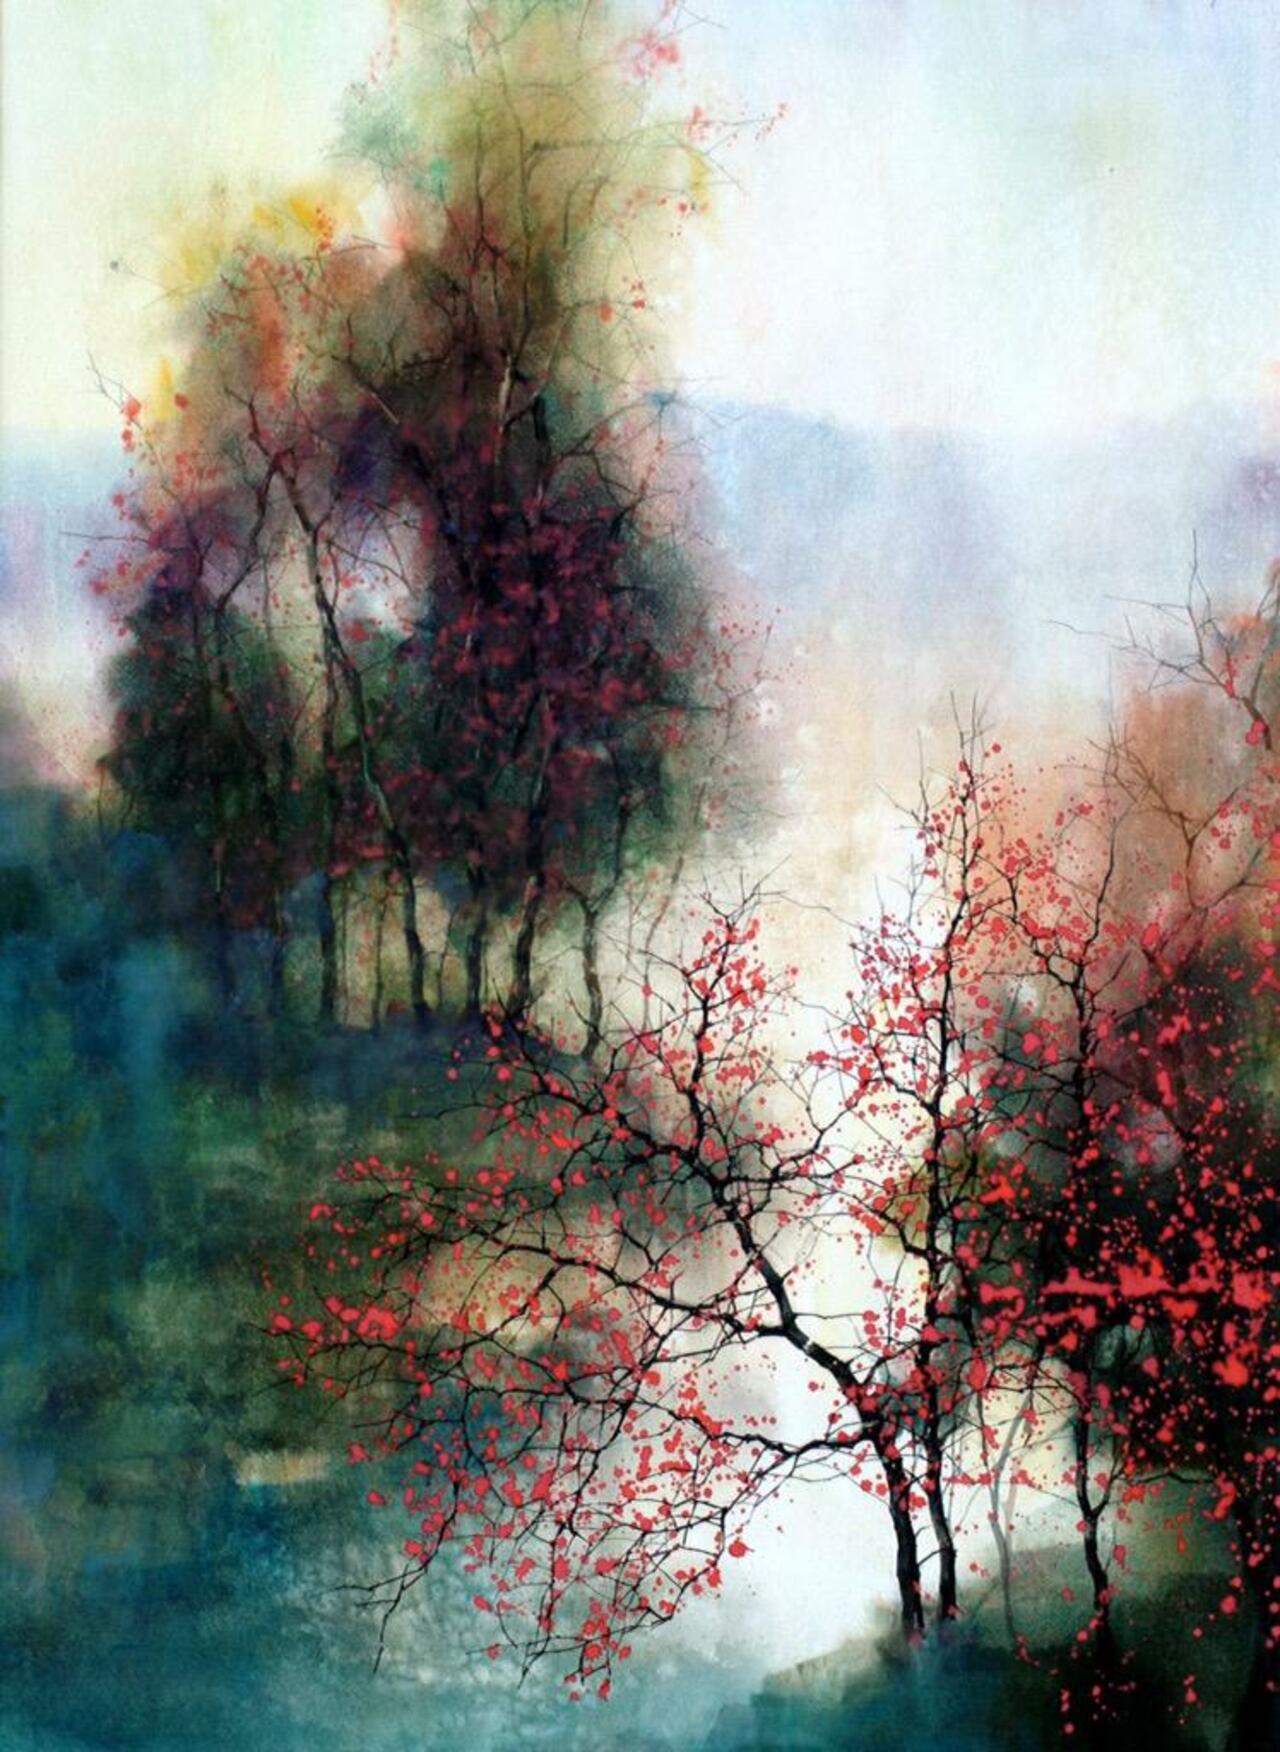 Z.L. Feng #artist watercolor landscape #art #fineart http://t.co/APS4qkZ4qO